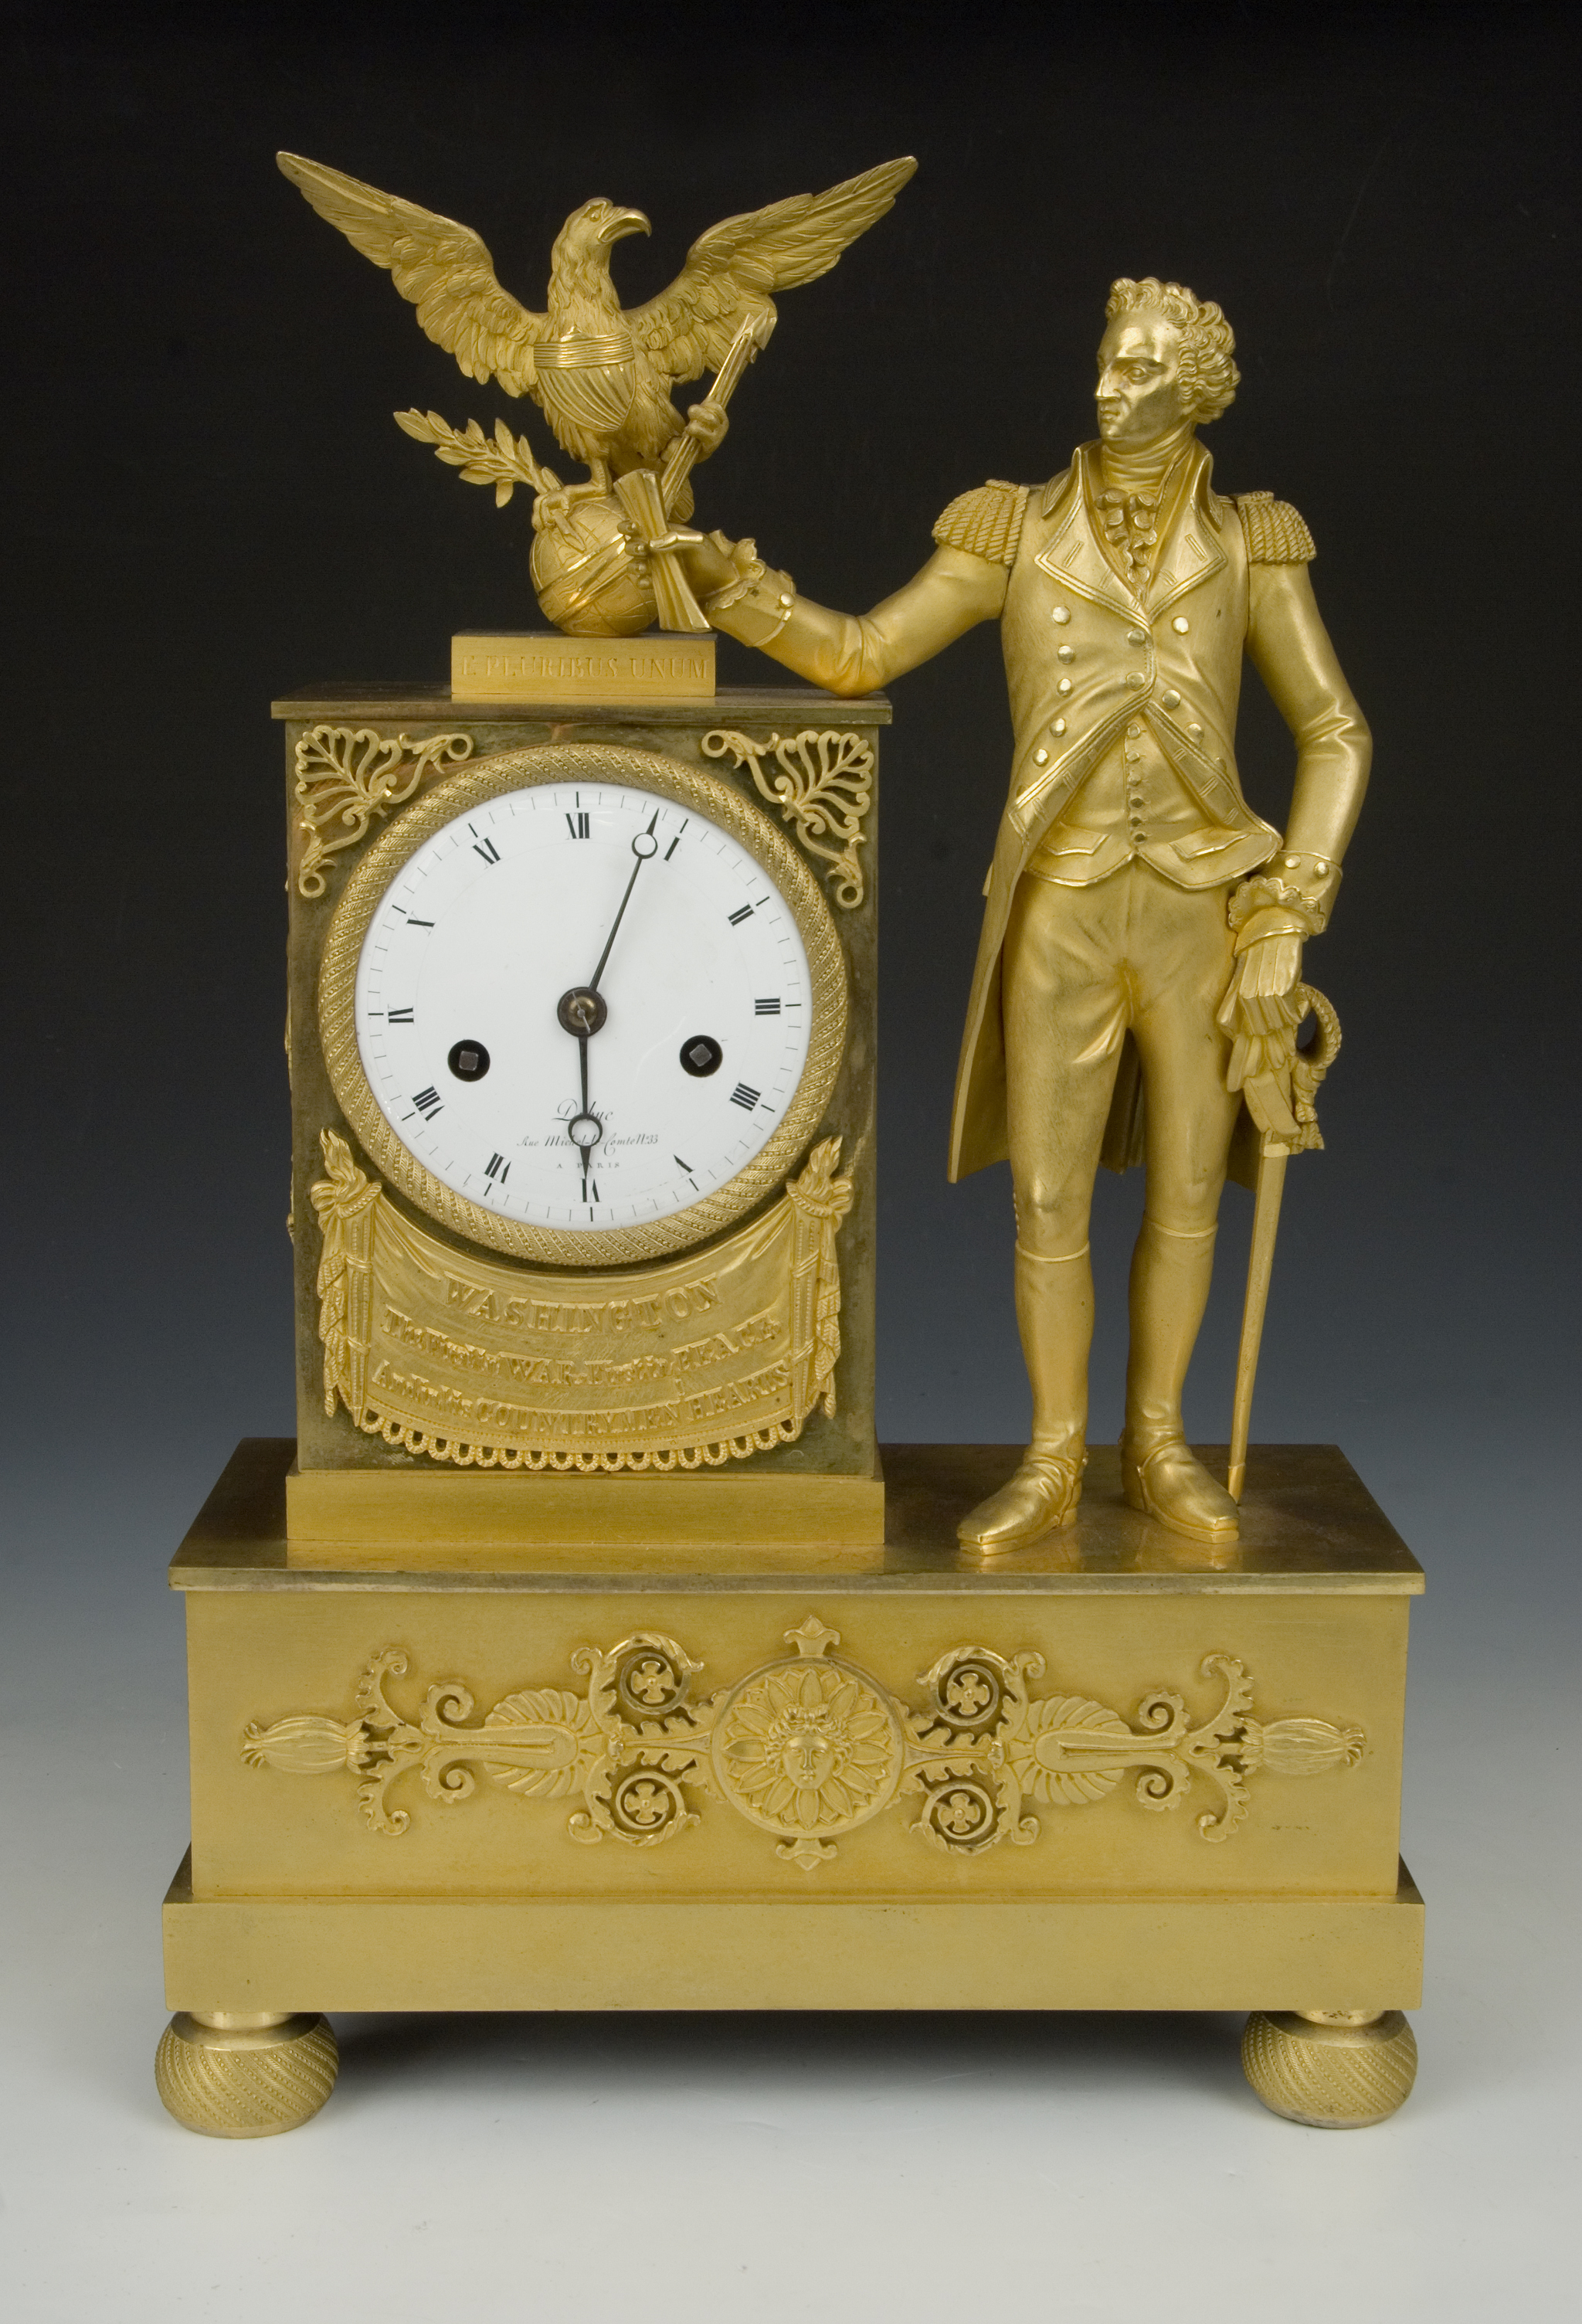 George Washington mantel clock by Jean-Baptiste DuBuc, Paris